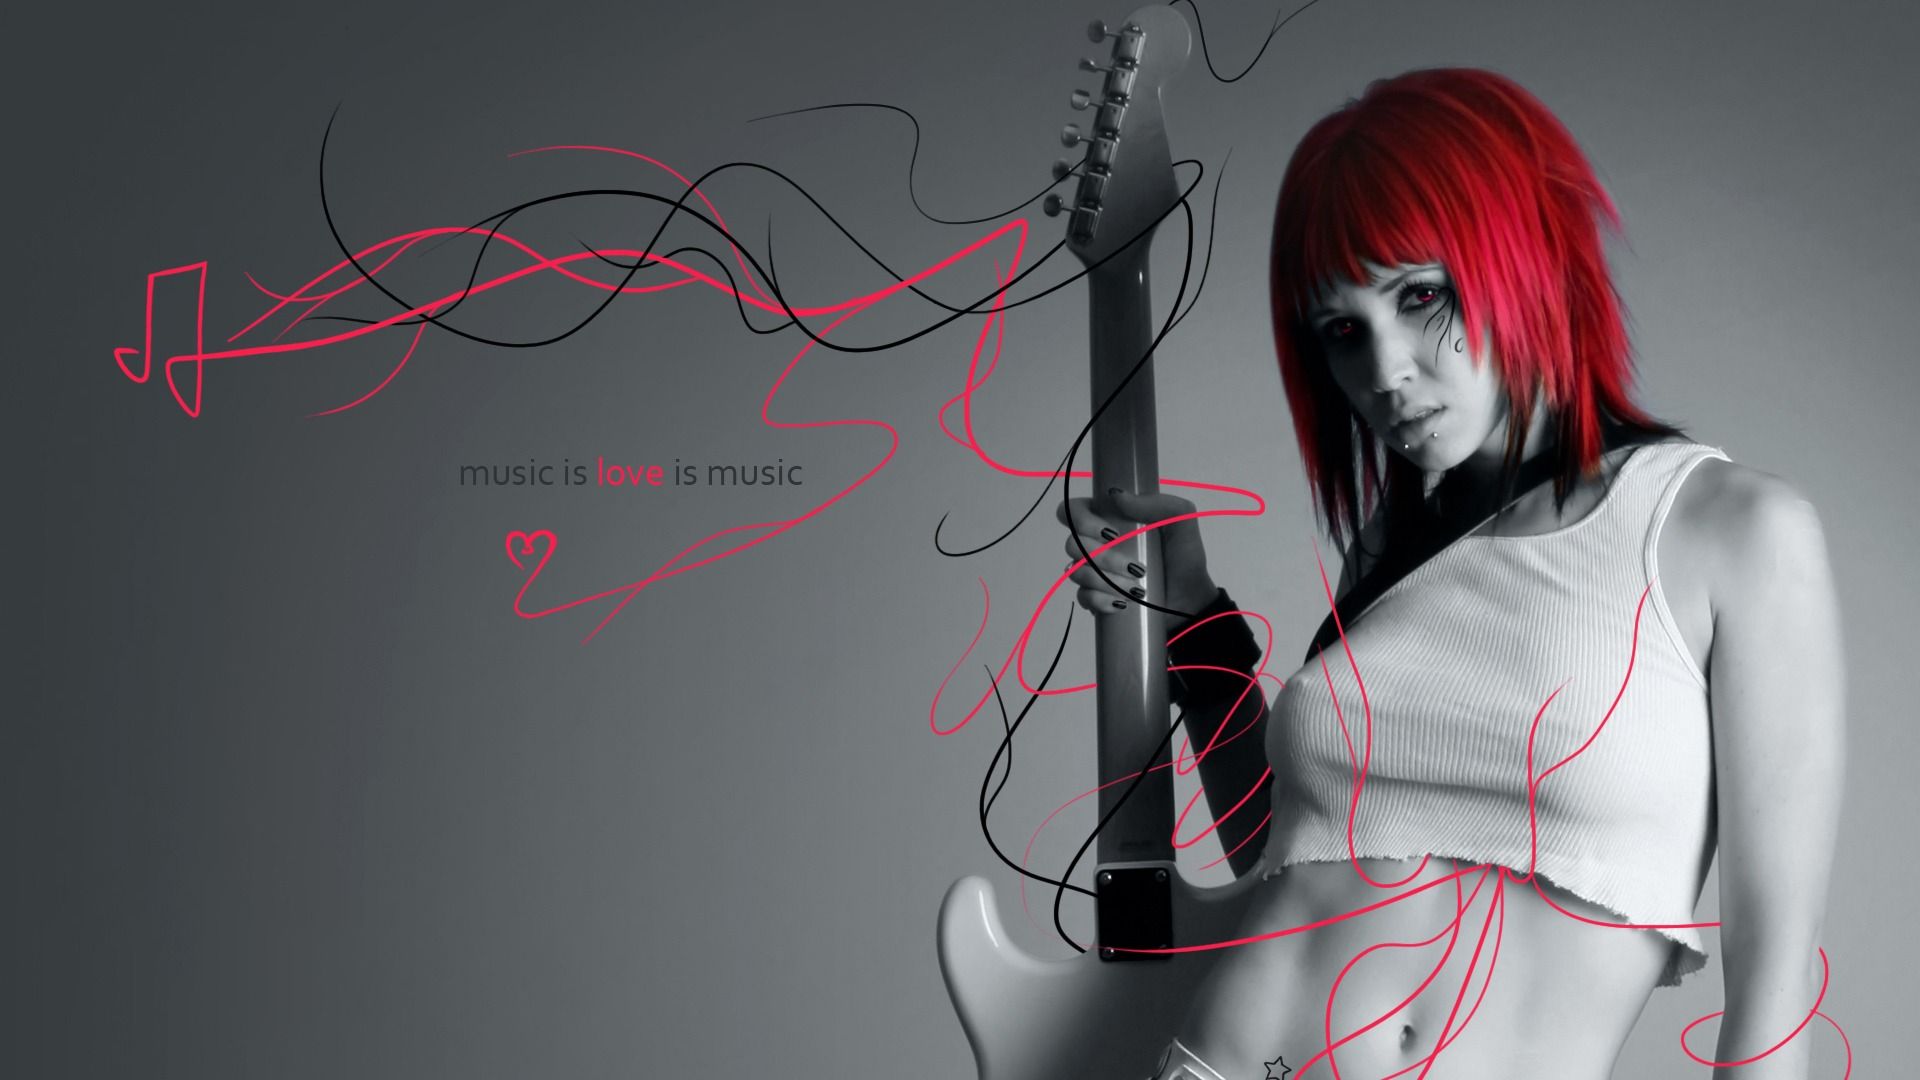 Music Is Love Wallpaper Female Singers Music Wallpaper in jpg format for free download